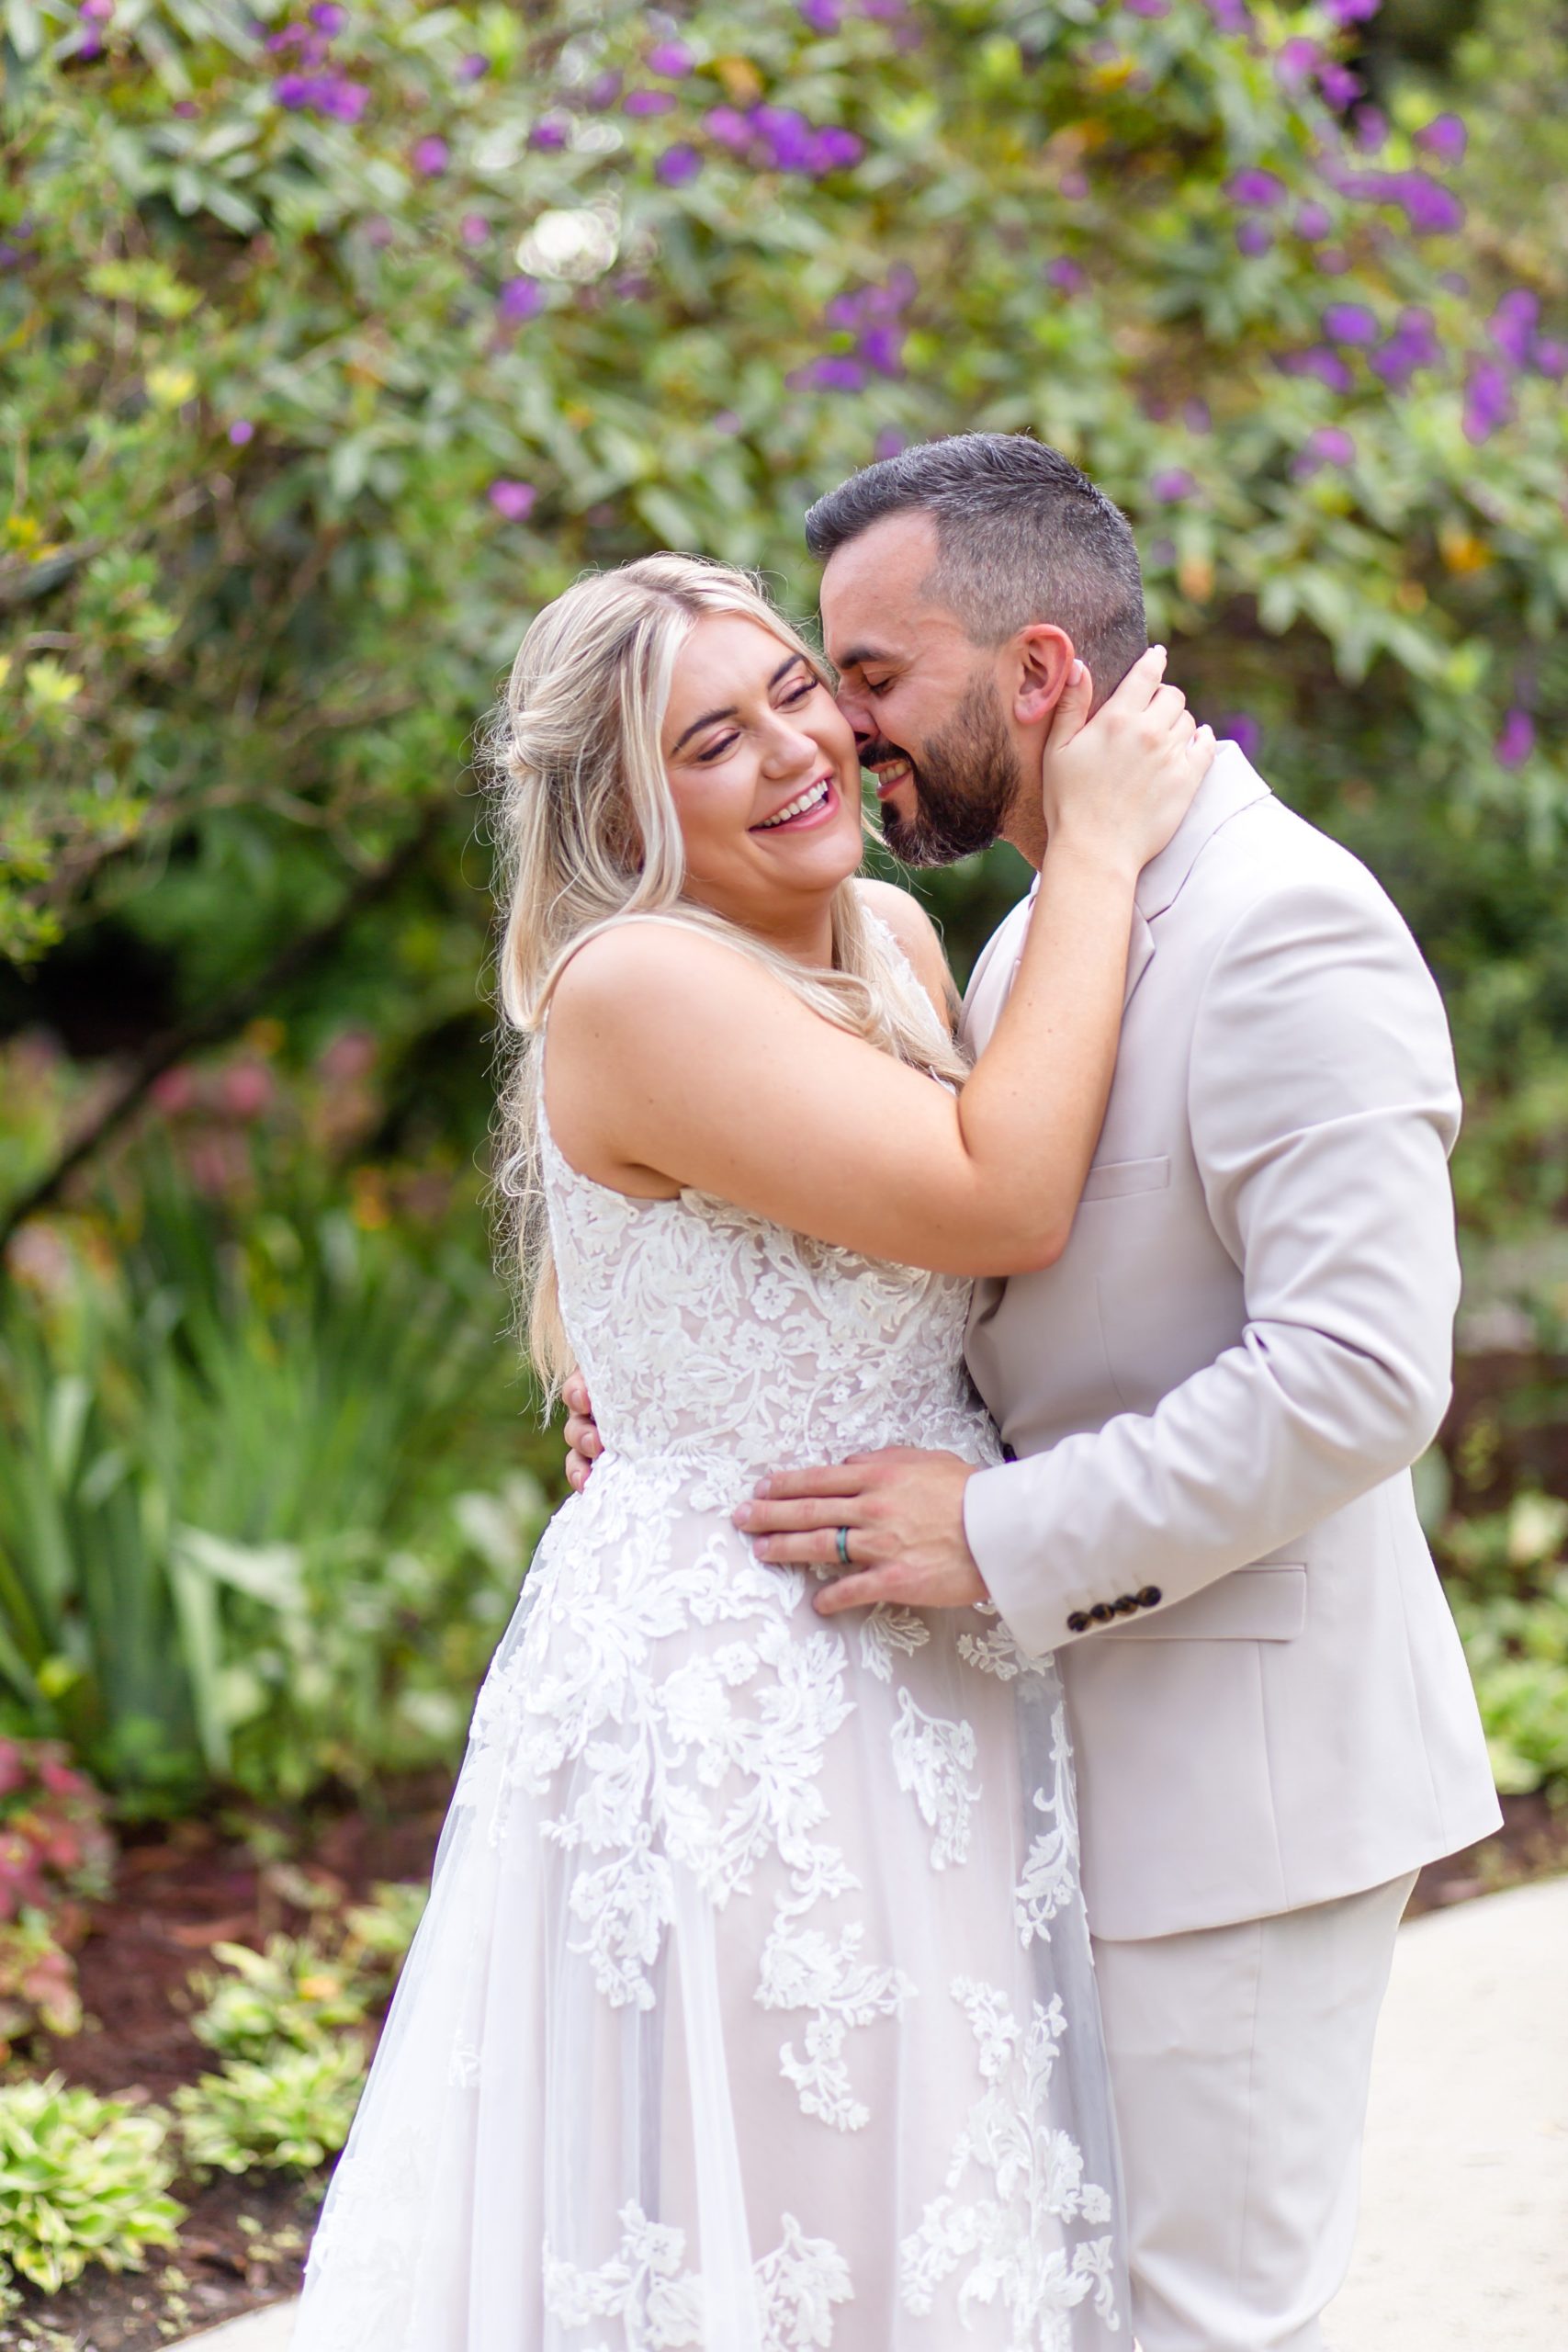 Leu Gardens Wedding Photos in Orlando, FL — Groom making Bride laugh in front of purple flowers